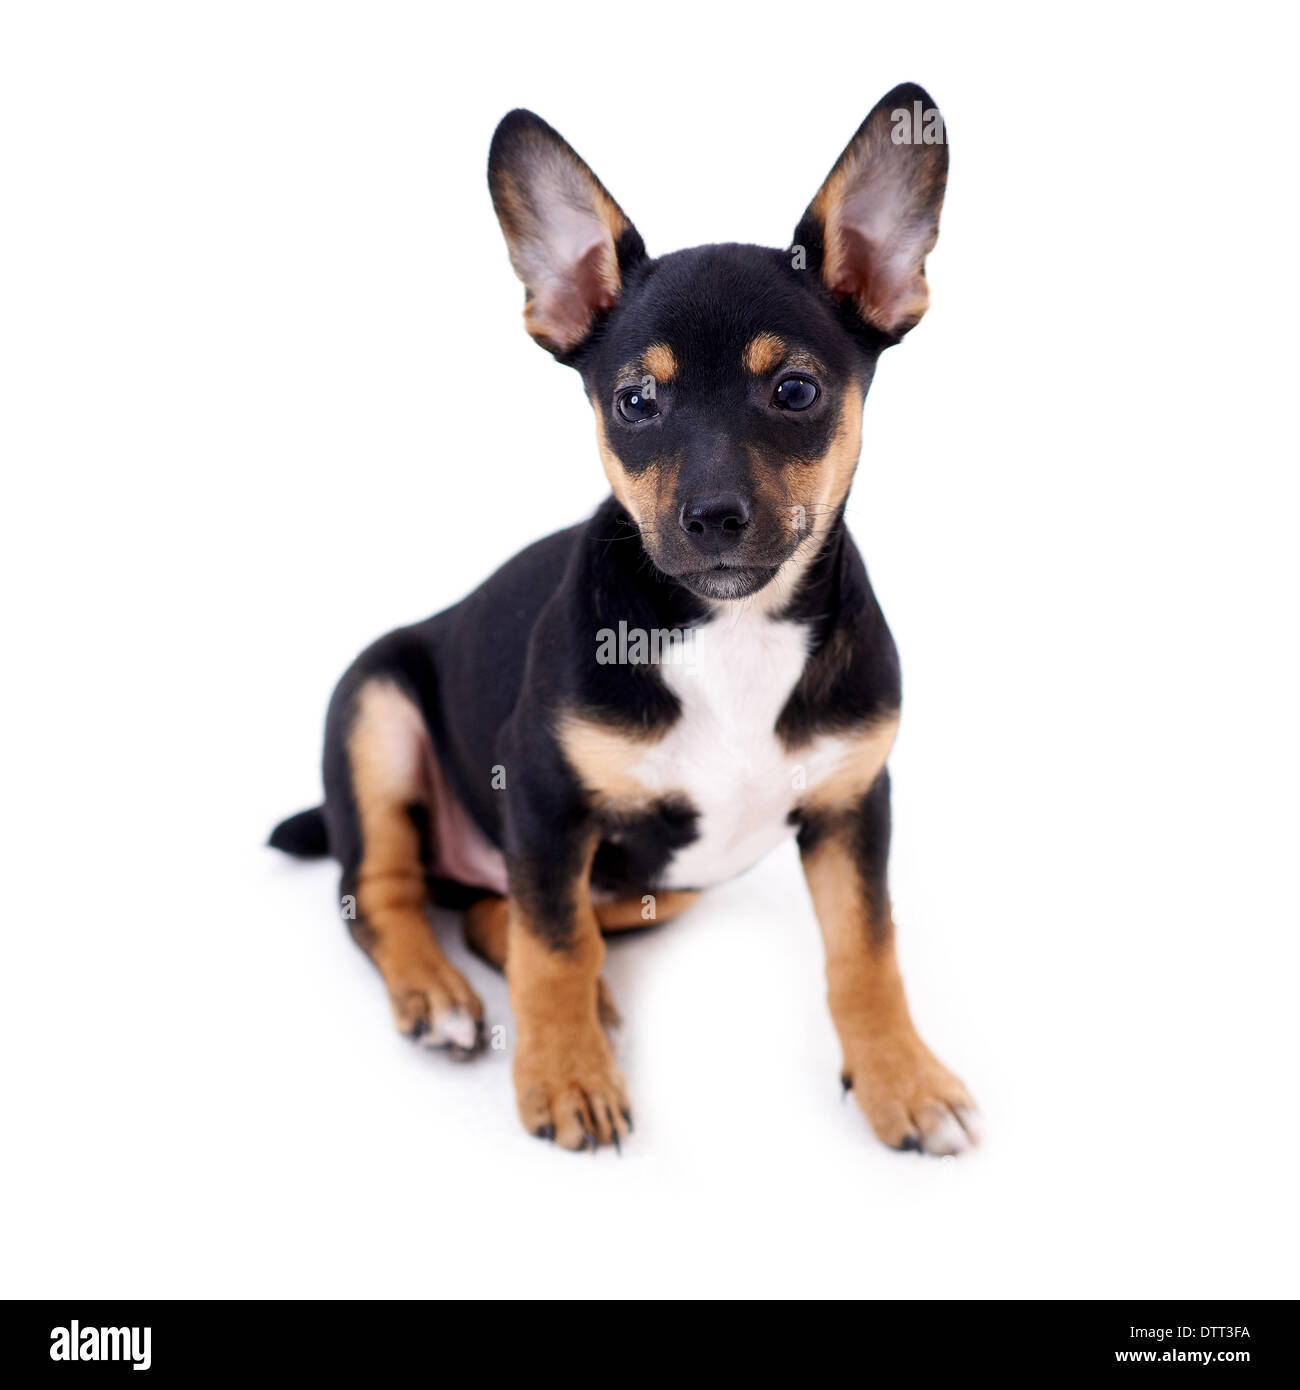 Young black coat puppy dog isolated on white Stock Photo